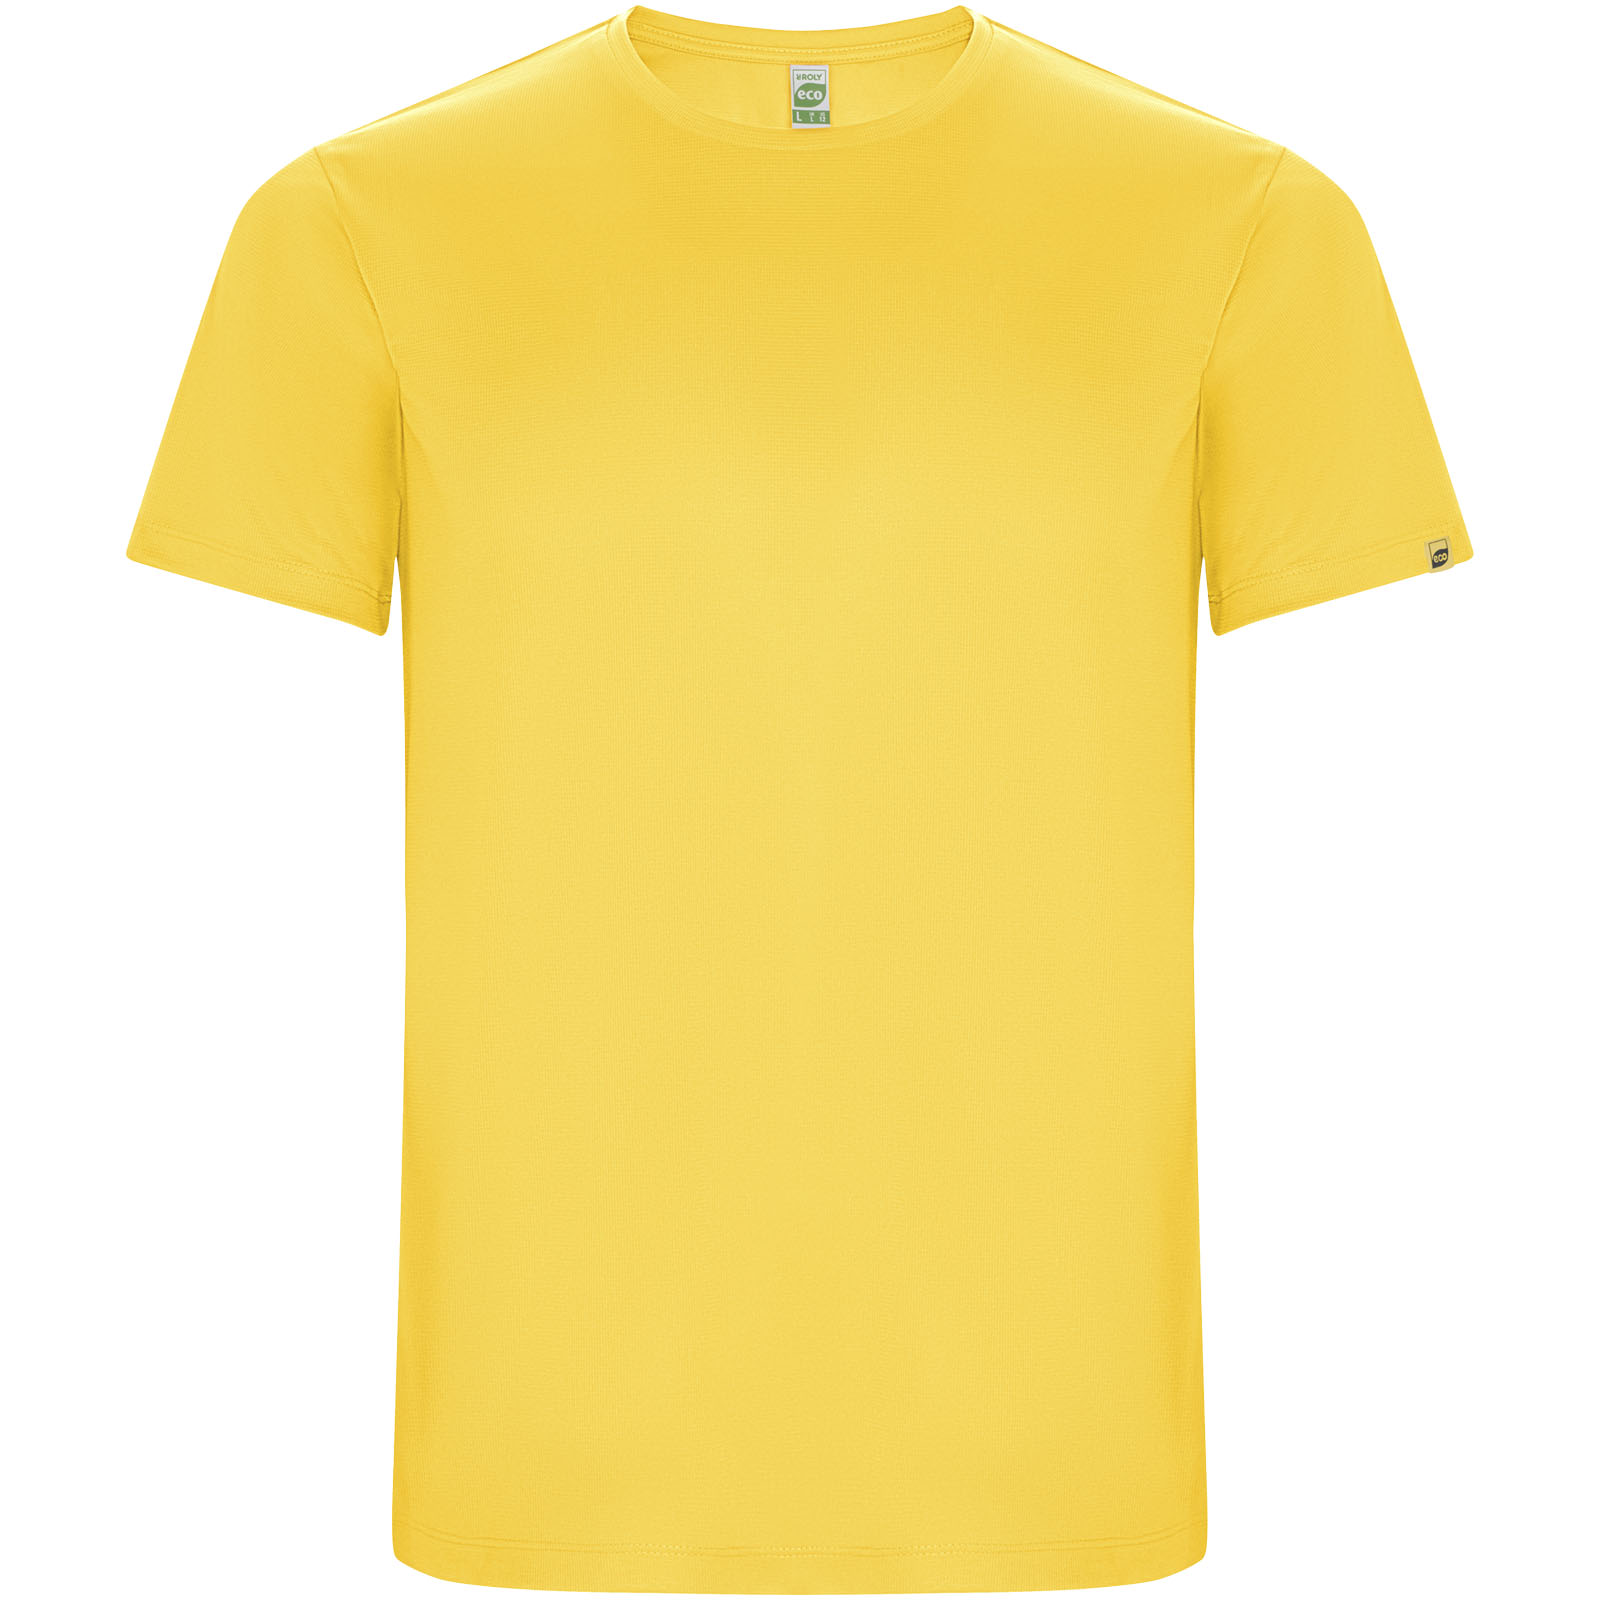 Advertising T-shirts - Imola short sleeve kids sports t-shirt - 0